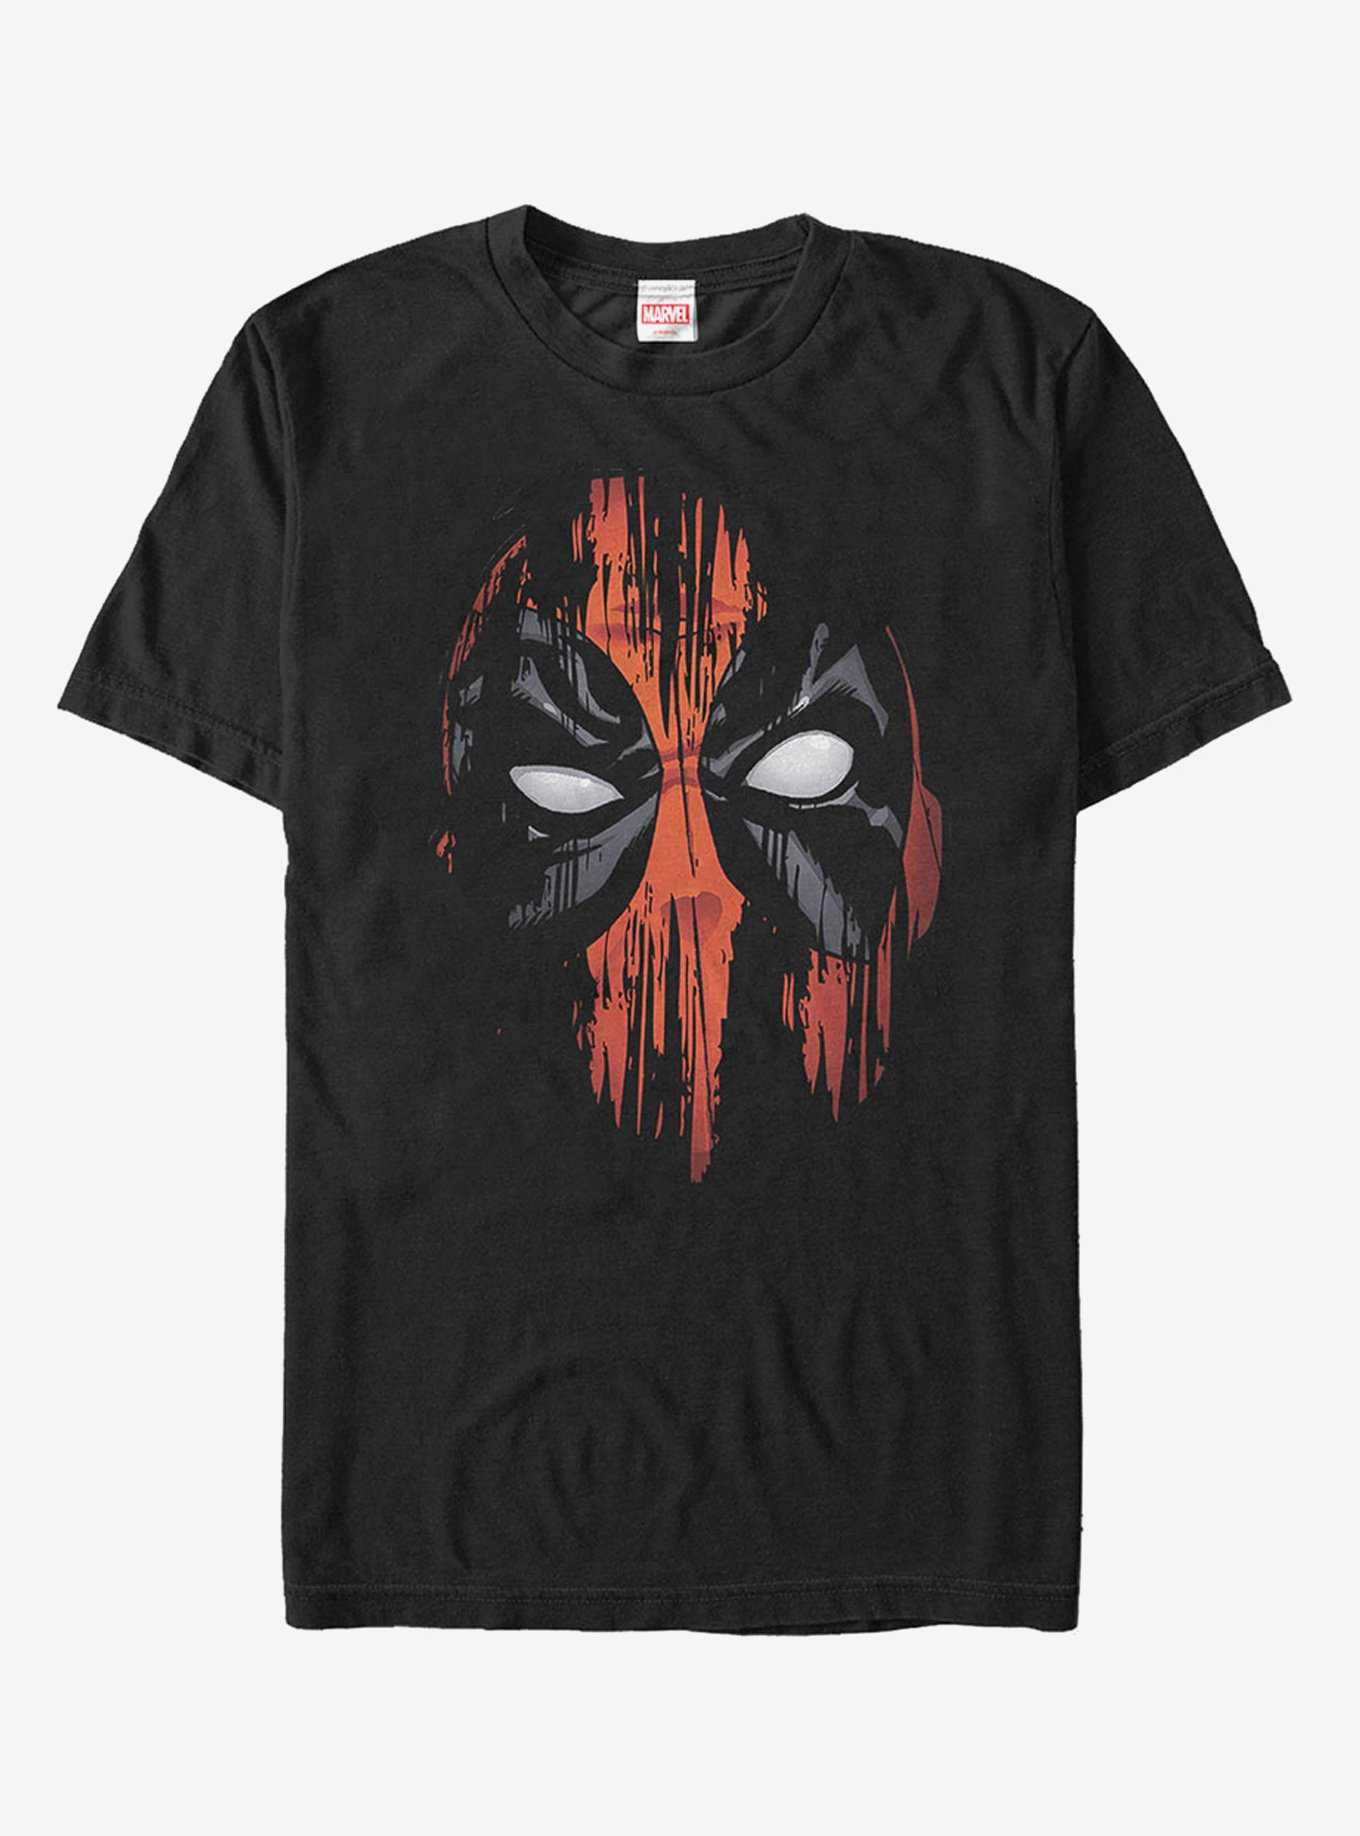 Marvel Deadpool Paint Streak Mask T-Shirt, , hi-res